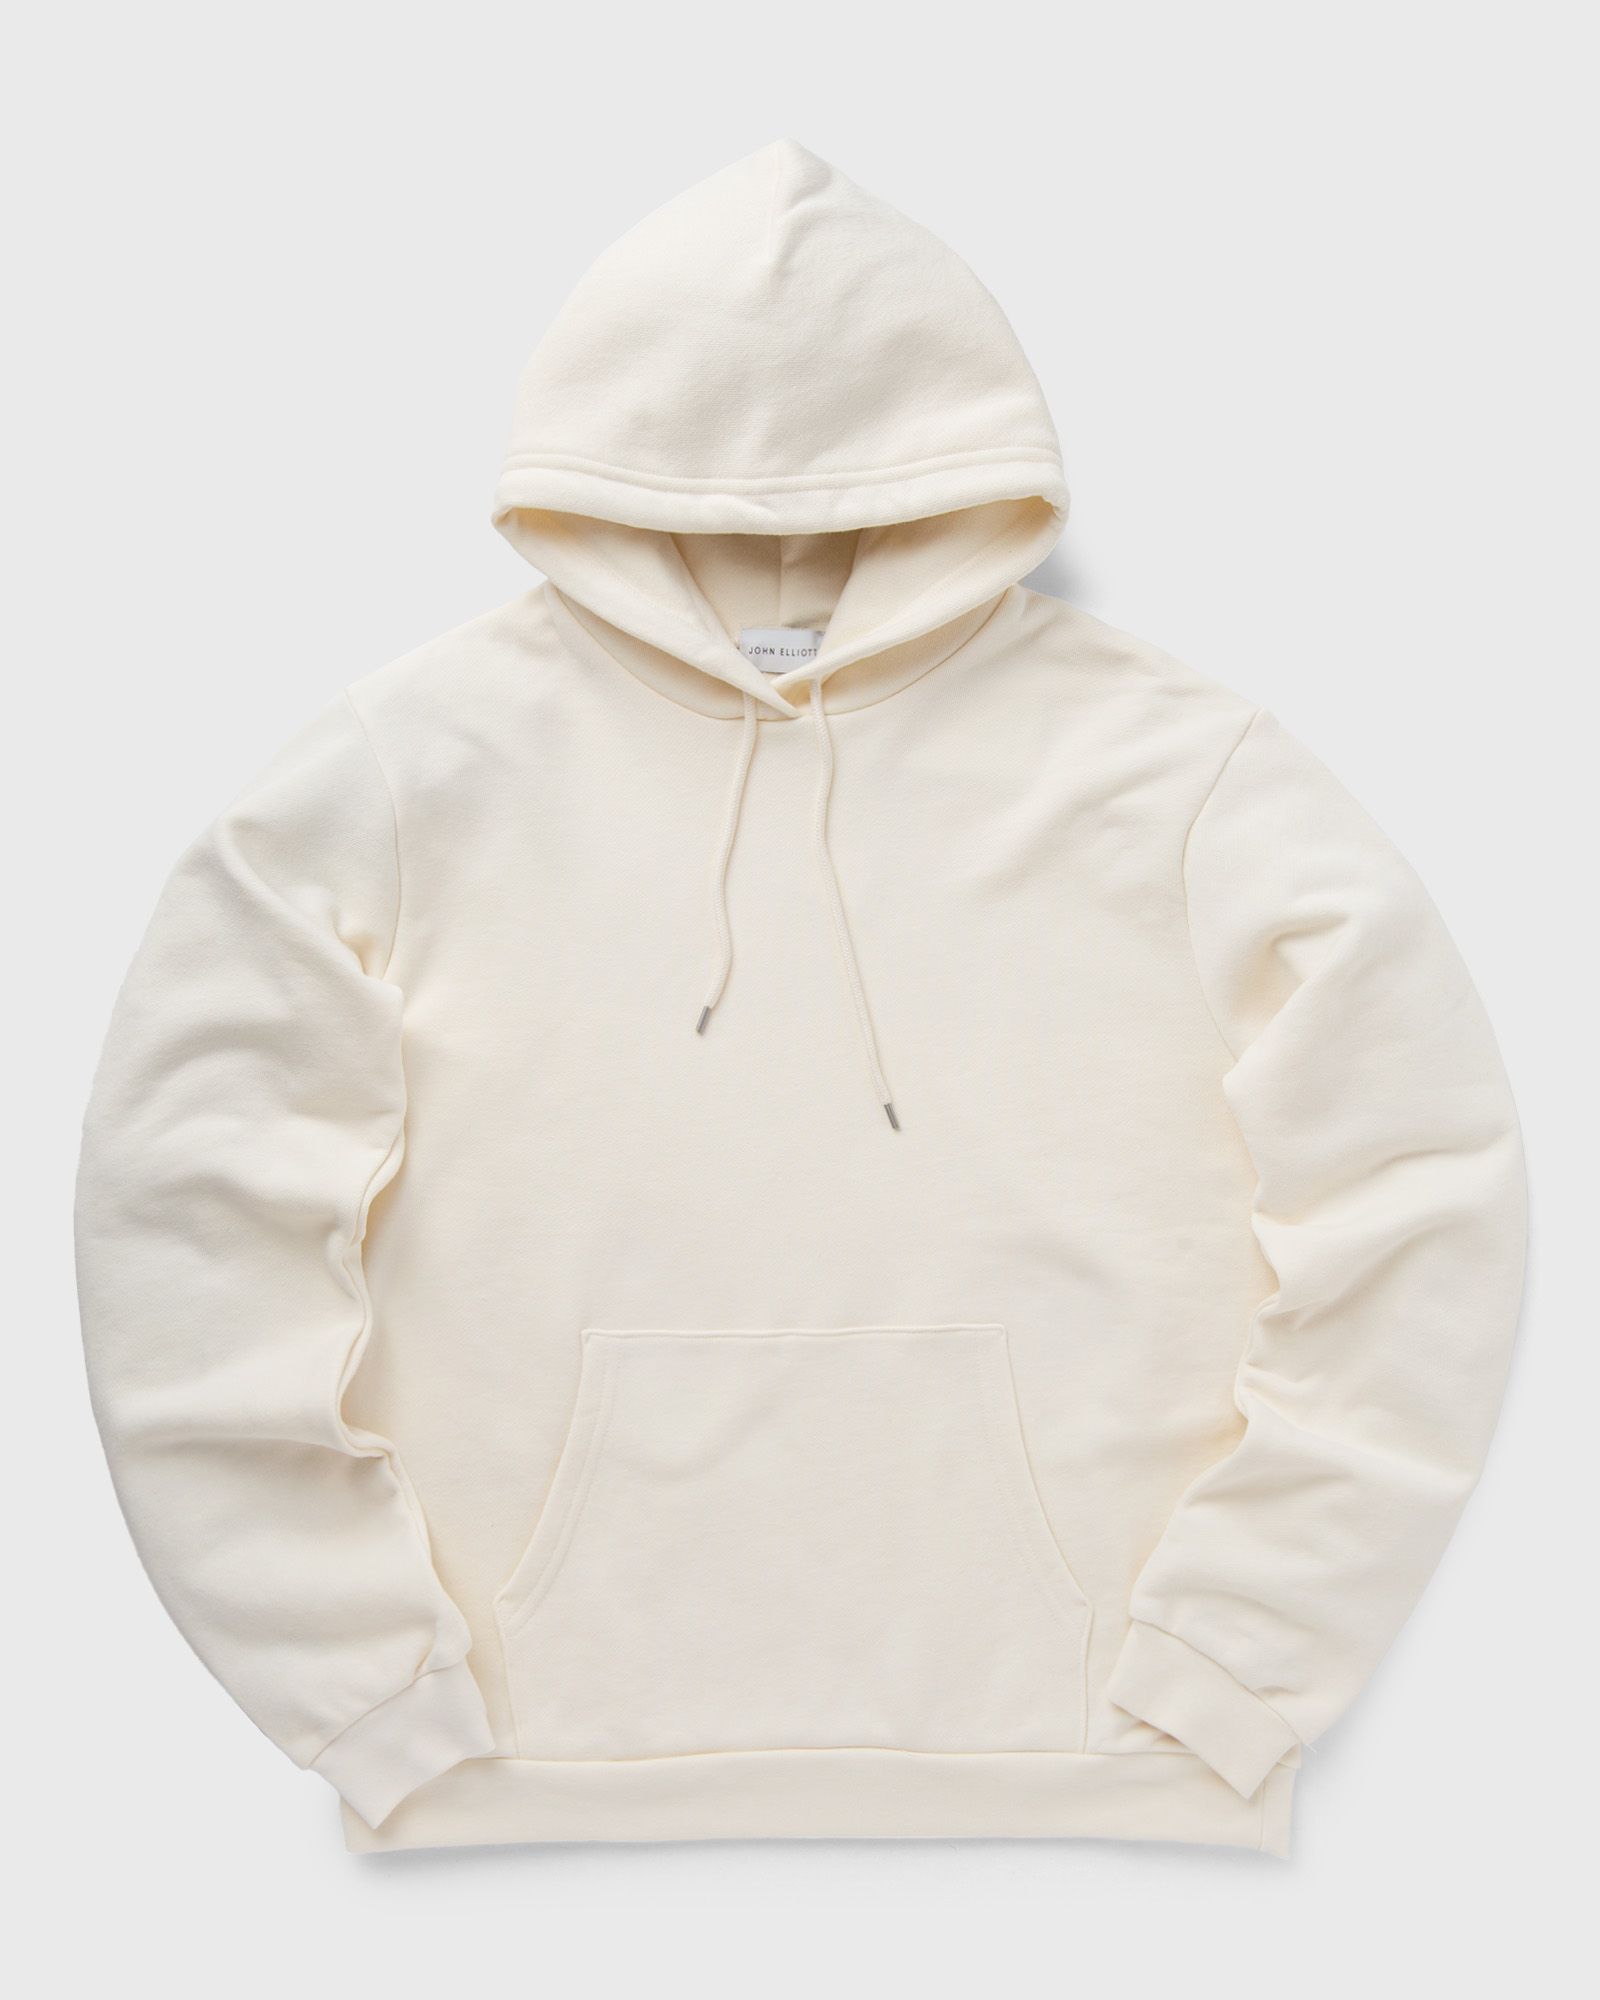 John Elliott - beach hoodie men hoodies white in größe:xxl